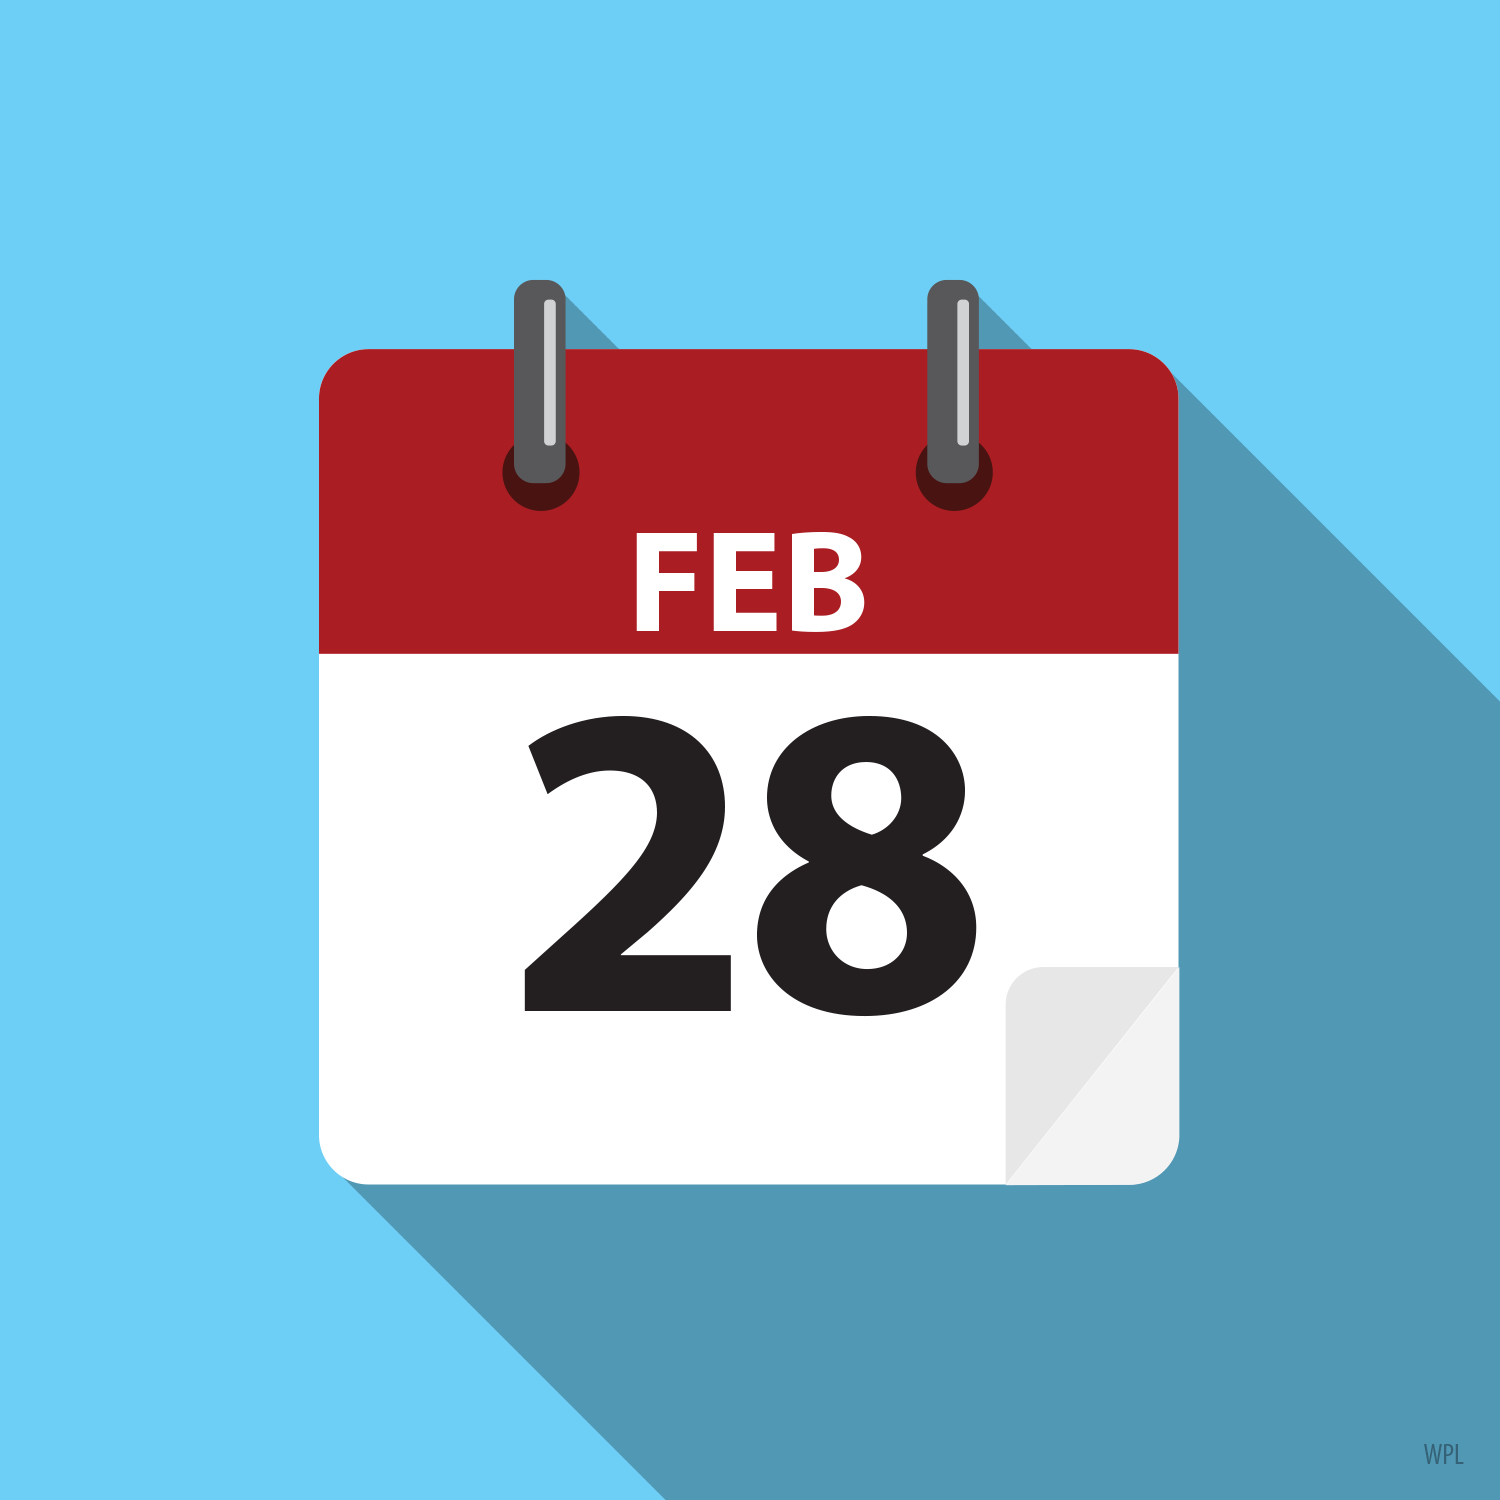 Calendar: Feb. 28